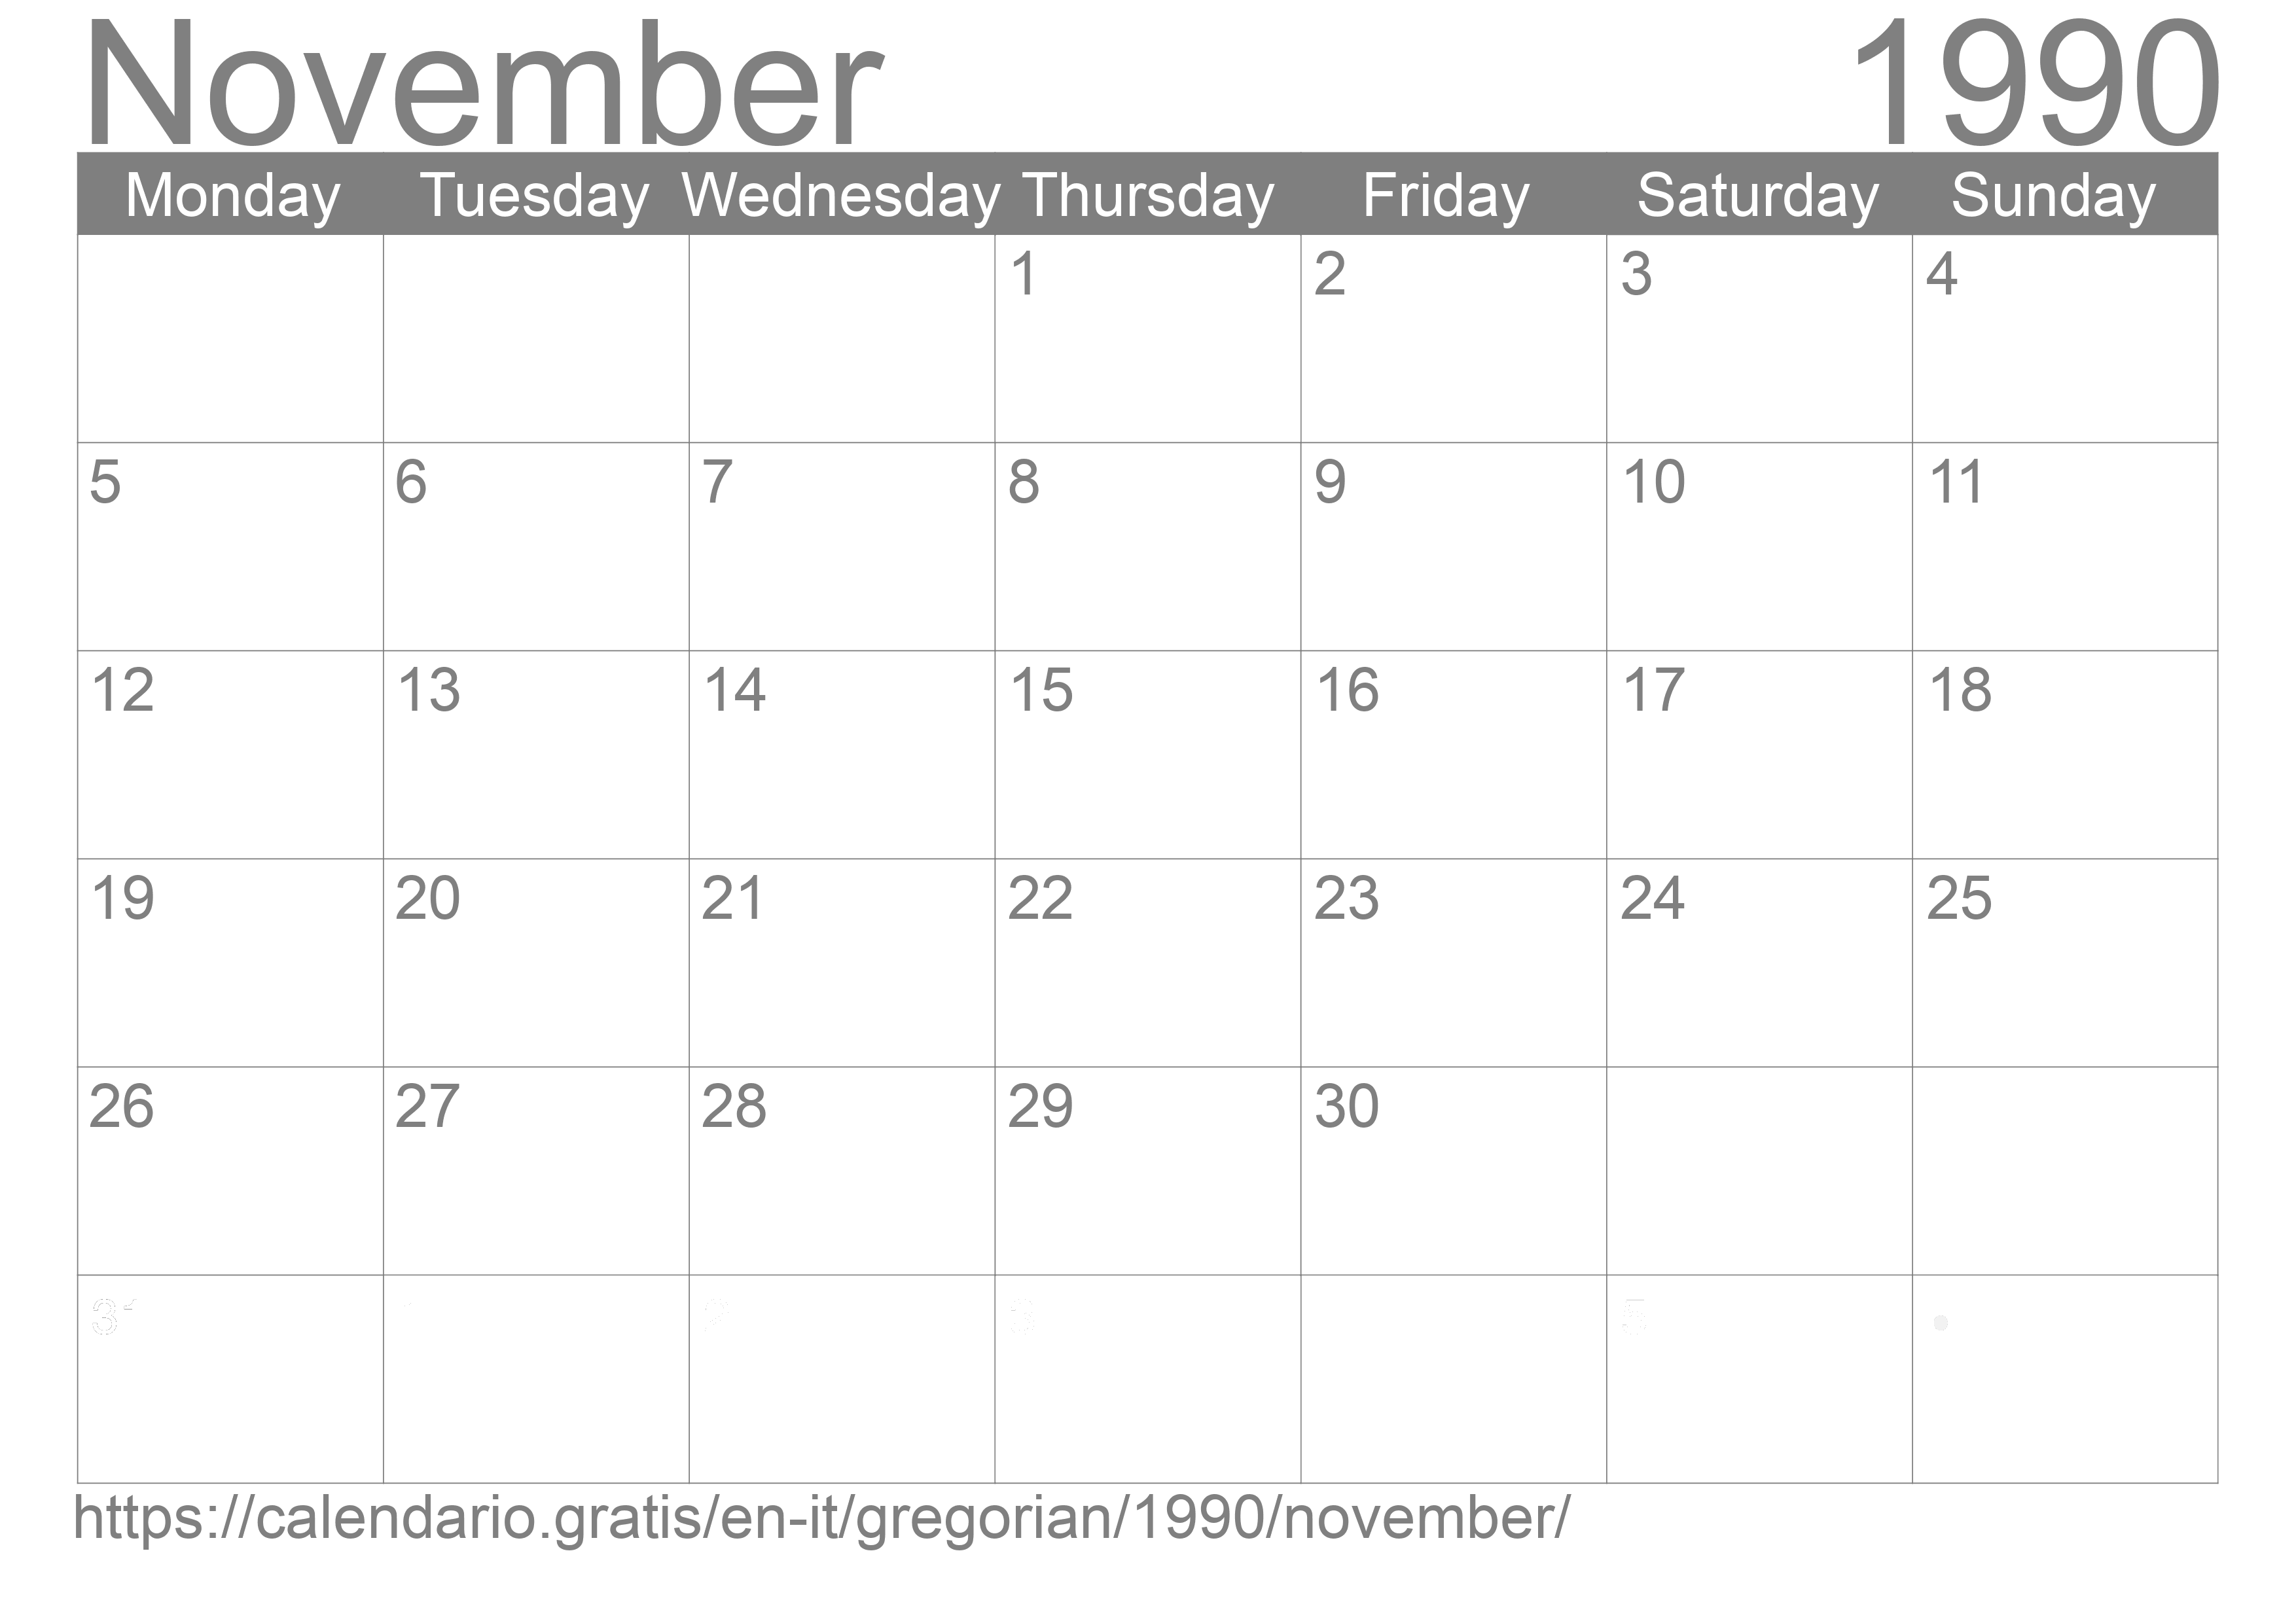 Calendar November 1990 to print